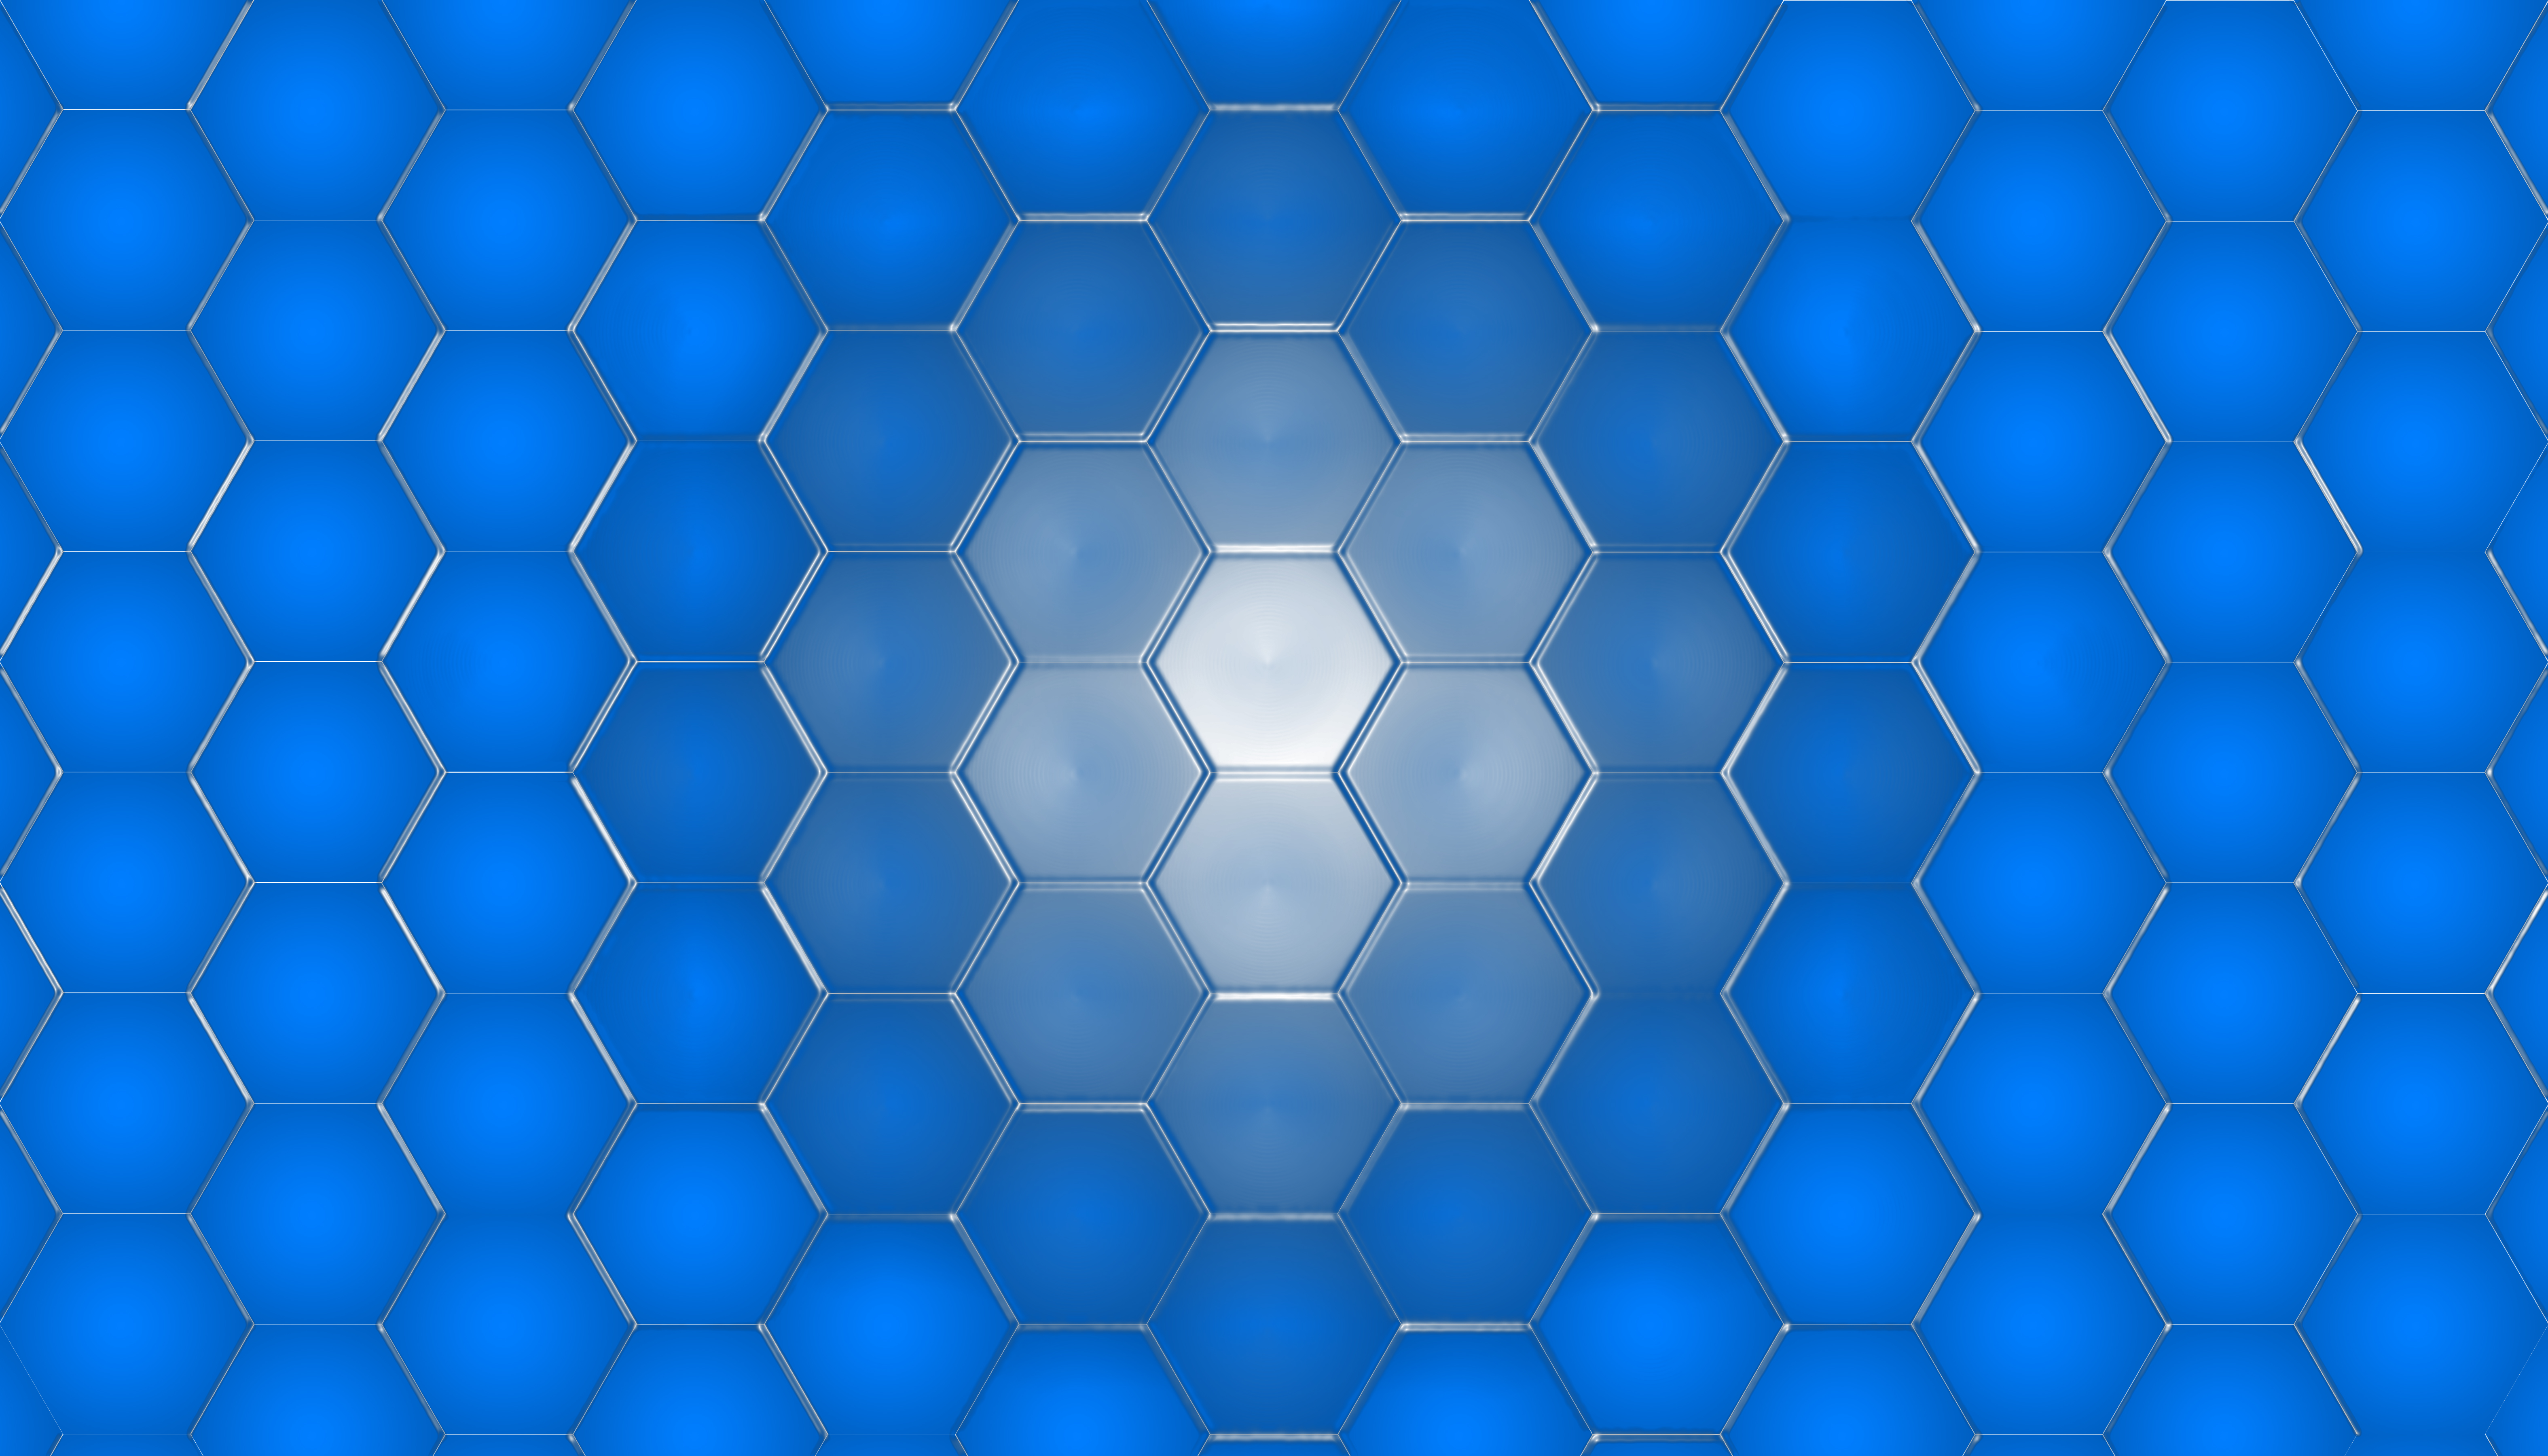 Blue Hexagon Wallpaper Wallpapersafari HD Wallpapers Download Free Images Wallpaper [wallpaper981.blogspot.com]